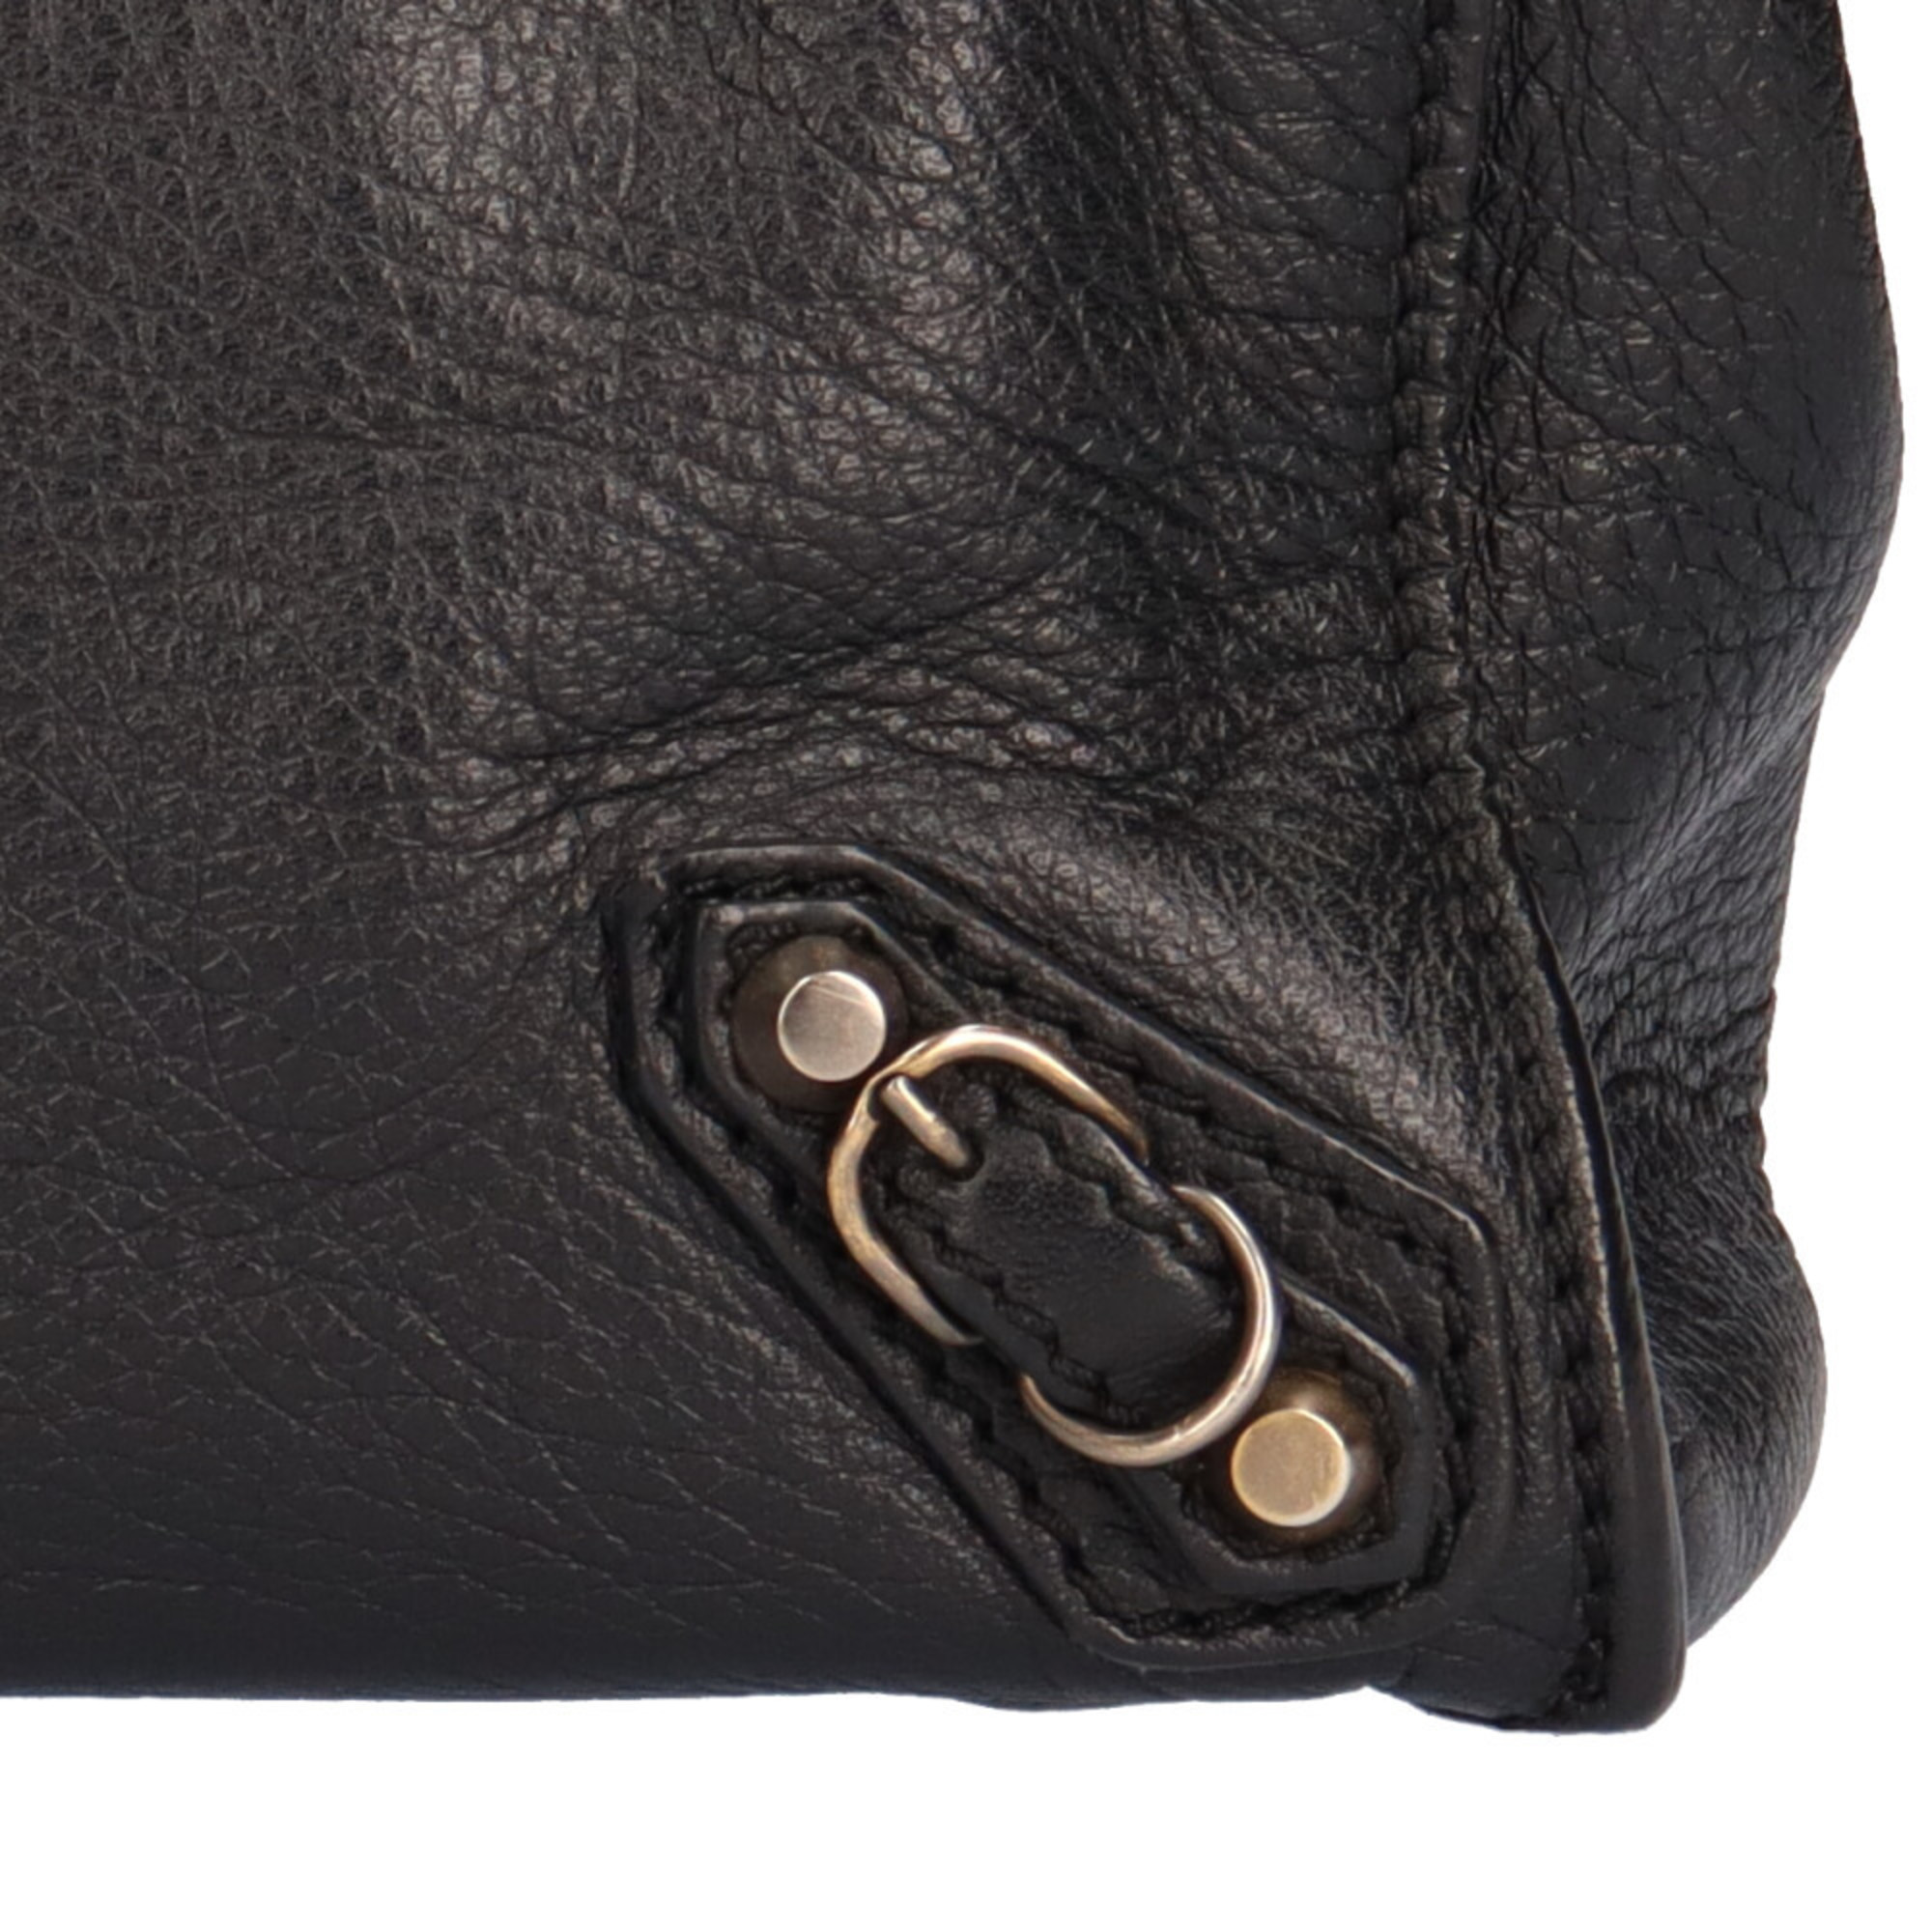 Balenciaga BALENCIAGA mini paper shoulder bag leather black ladies